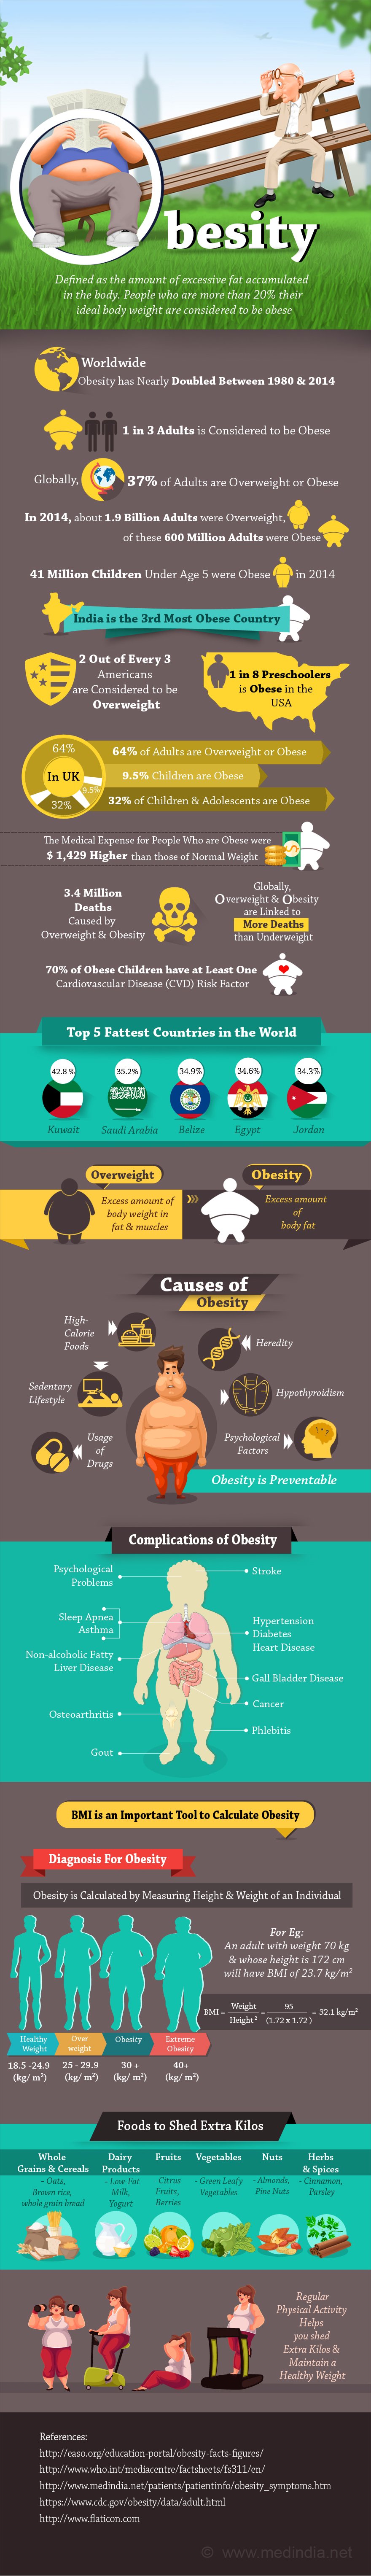 obesity infographic animation